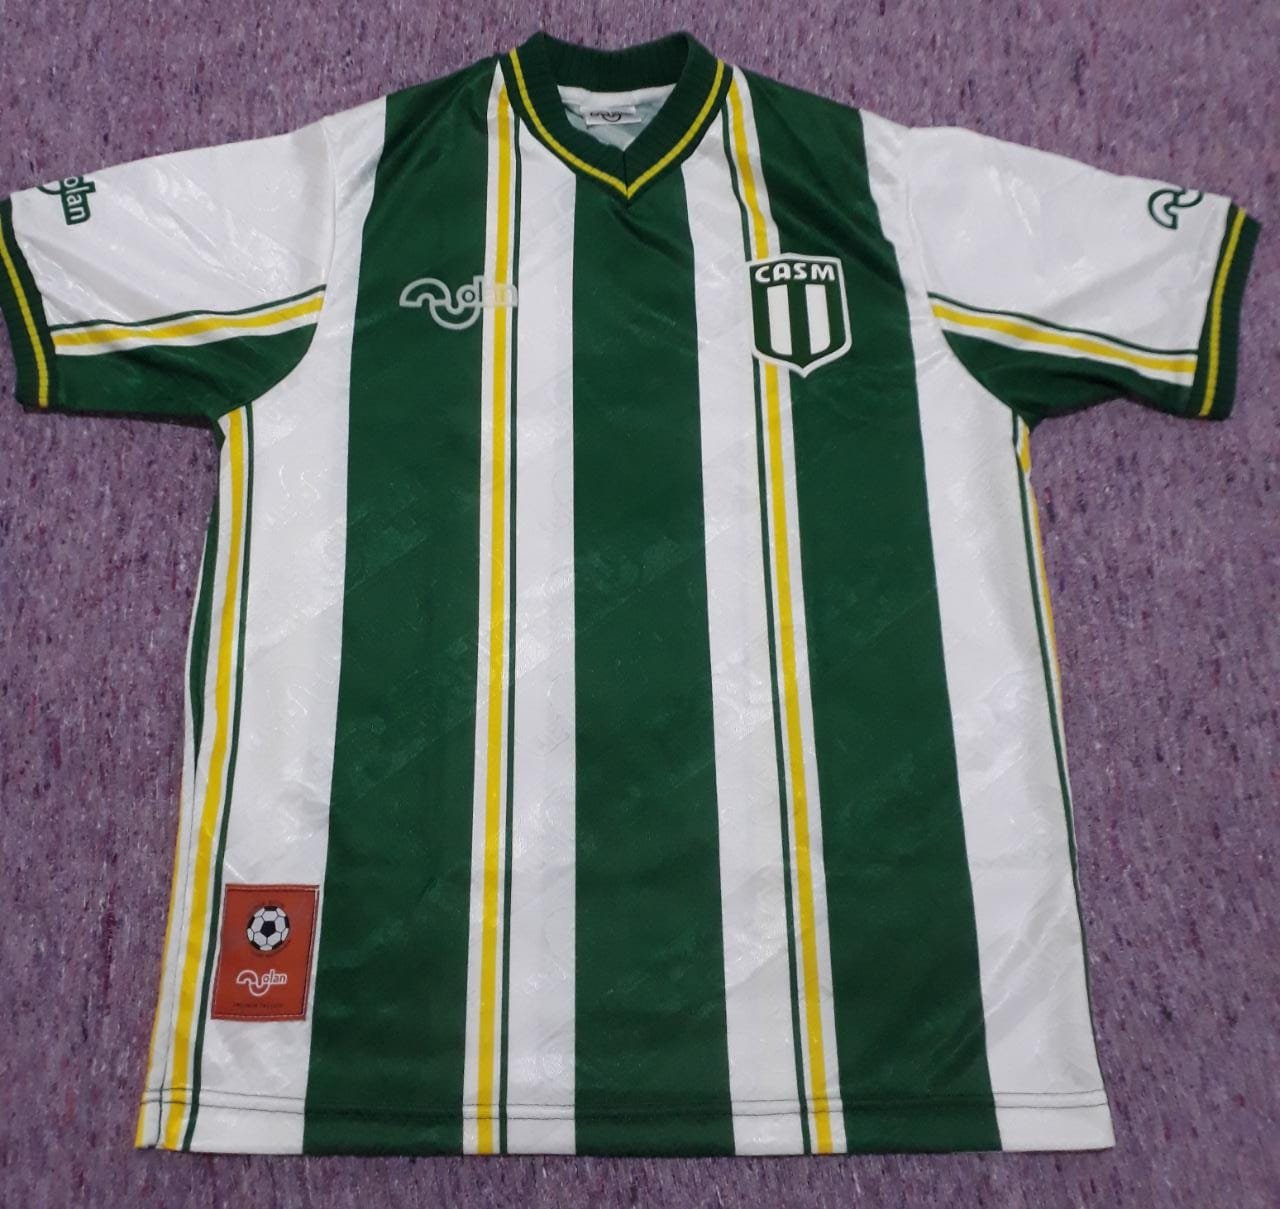 Club Atletico San Miguel Home football shirt 2002.